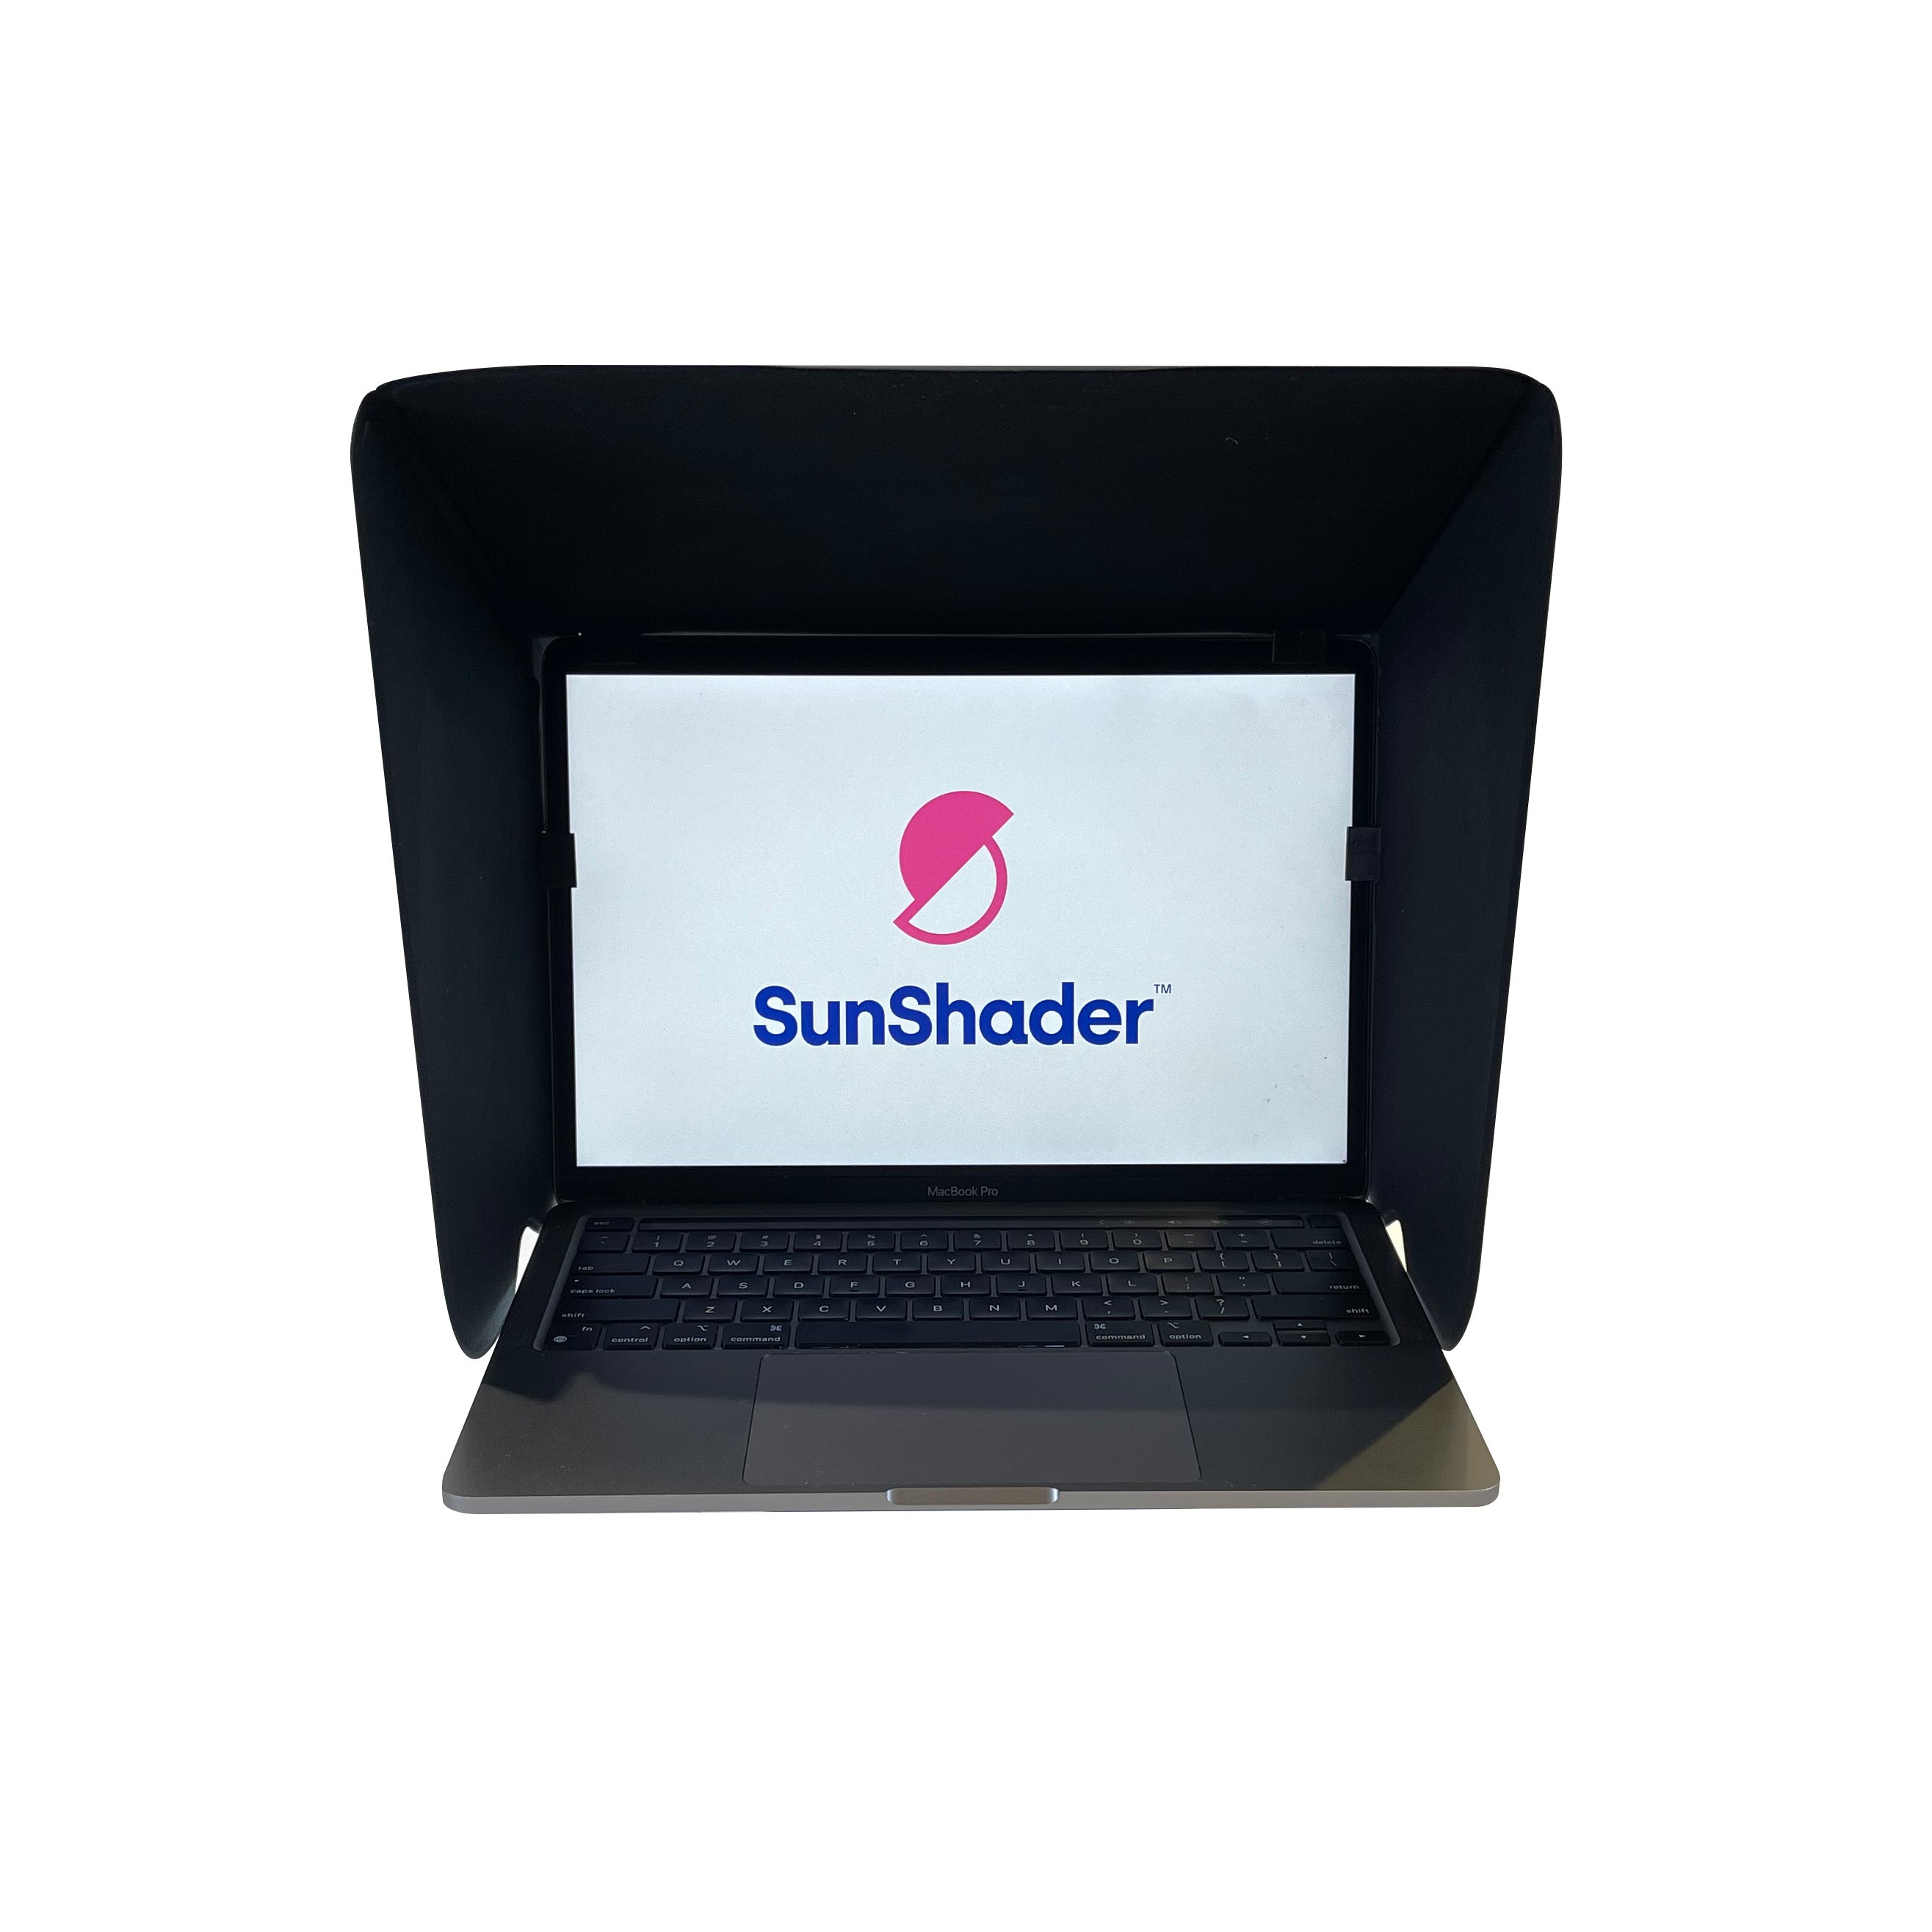 SunShader 3 - Custom-printed with your logos